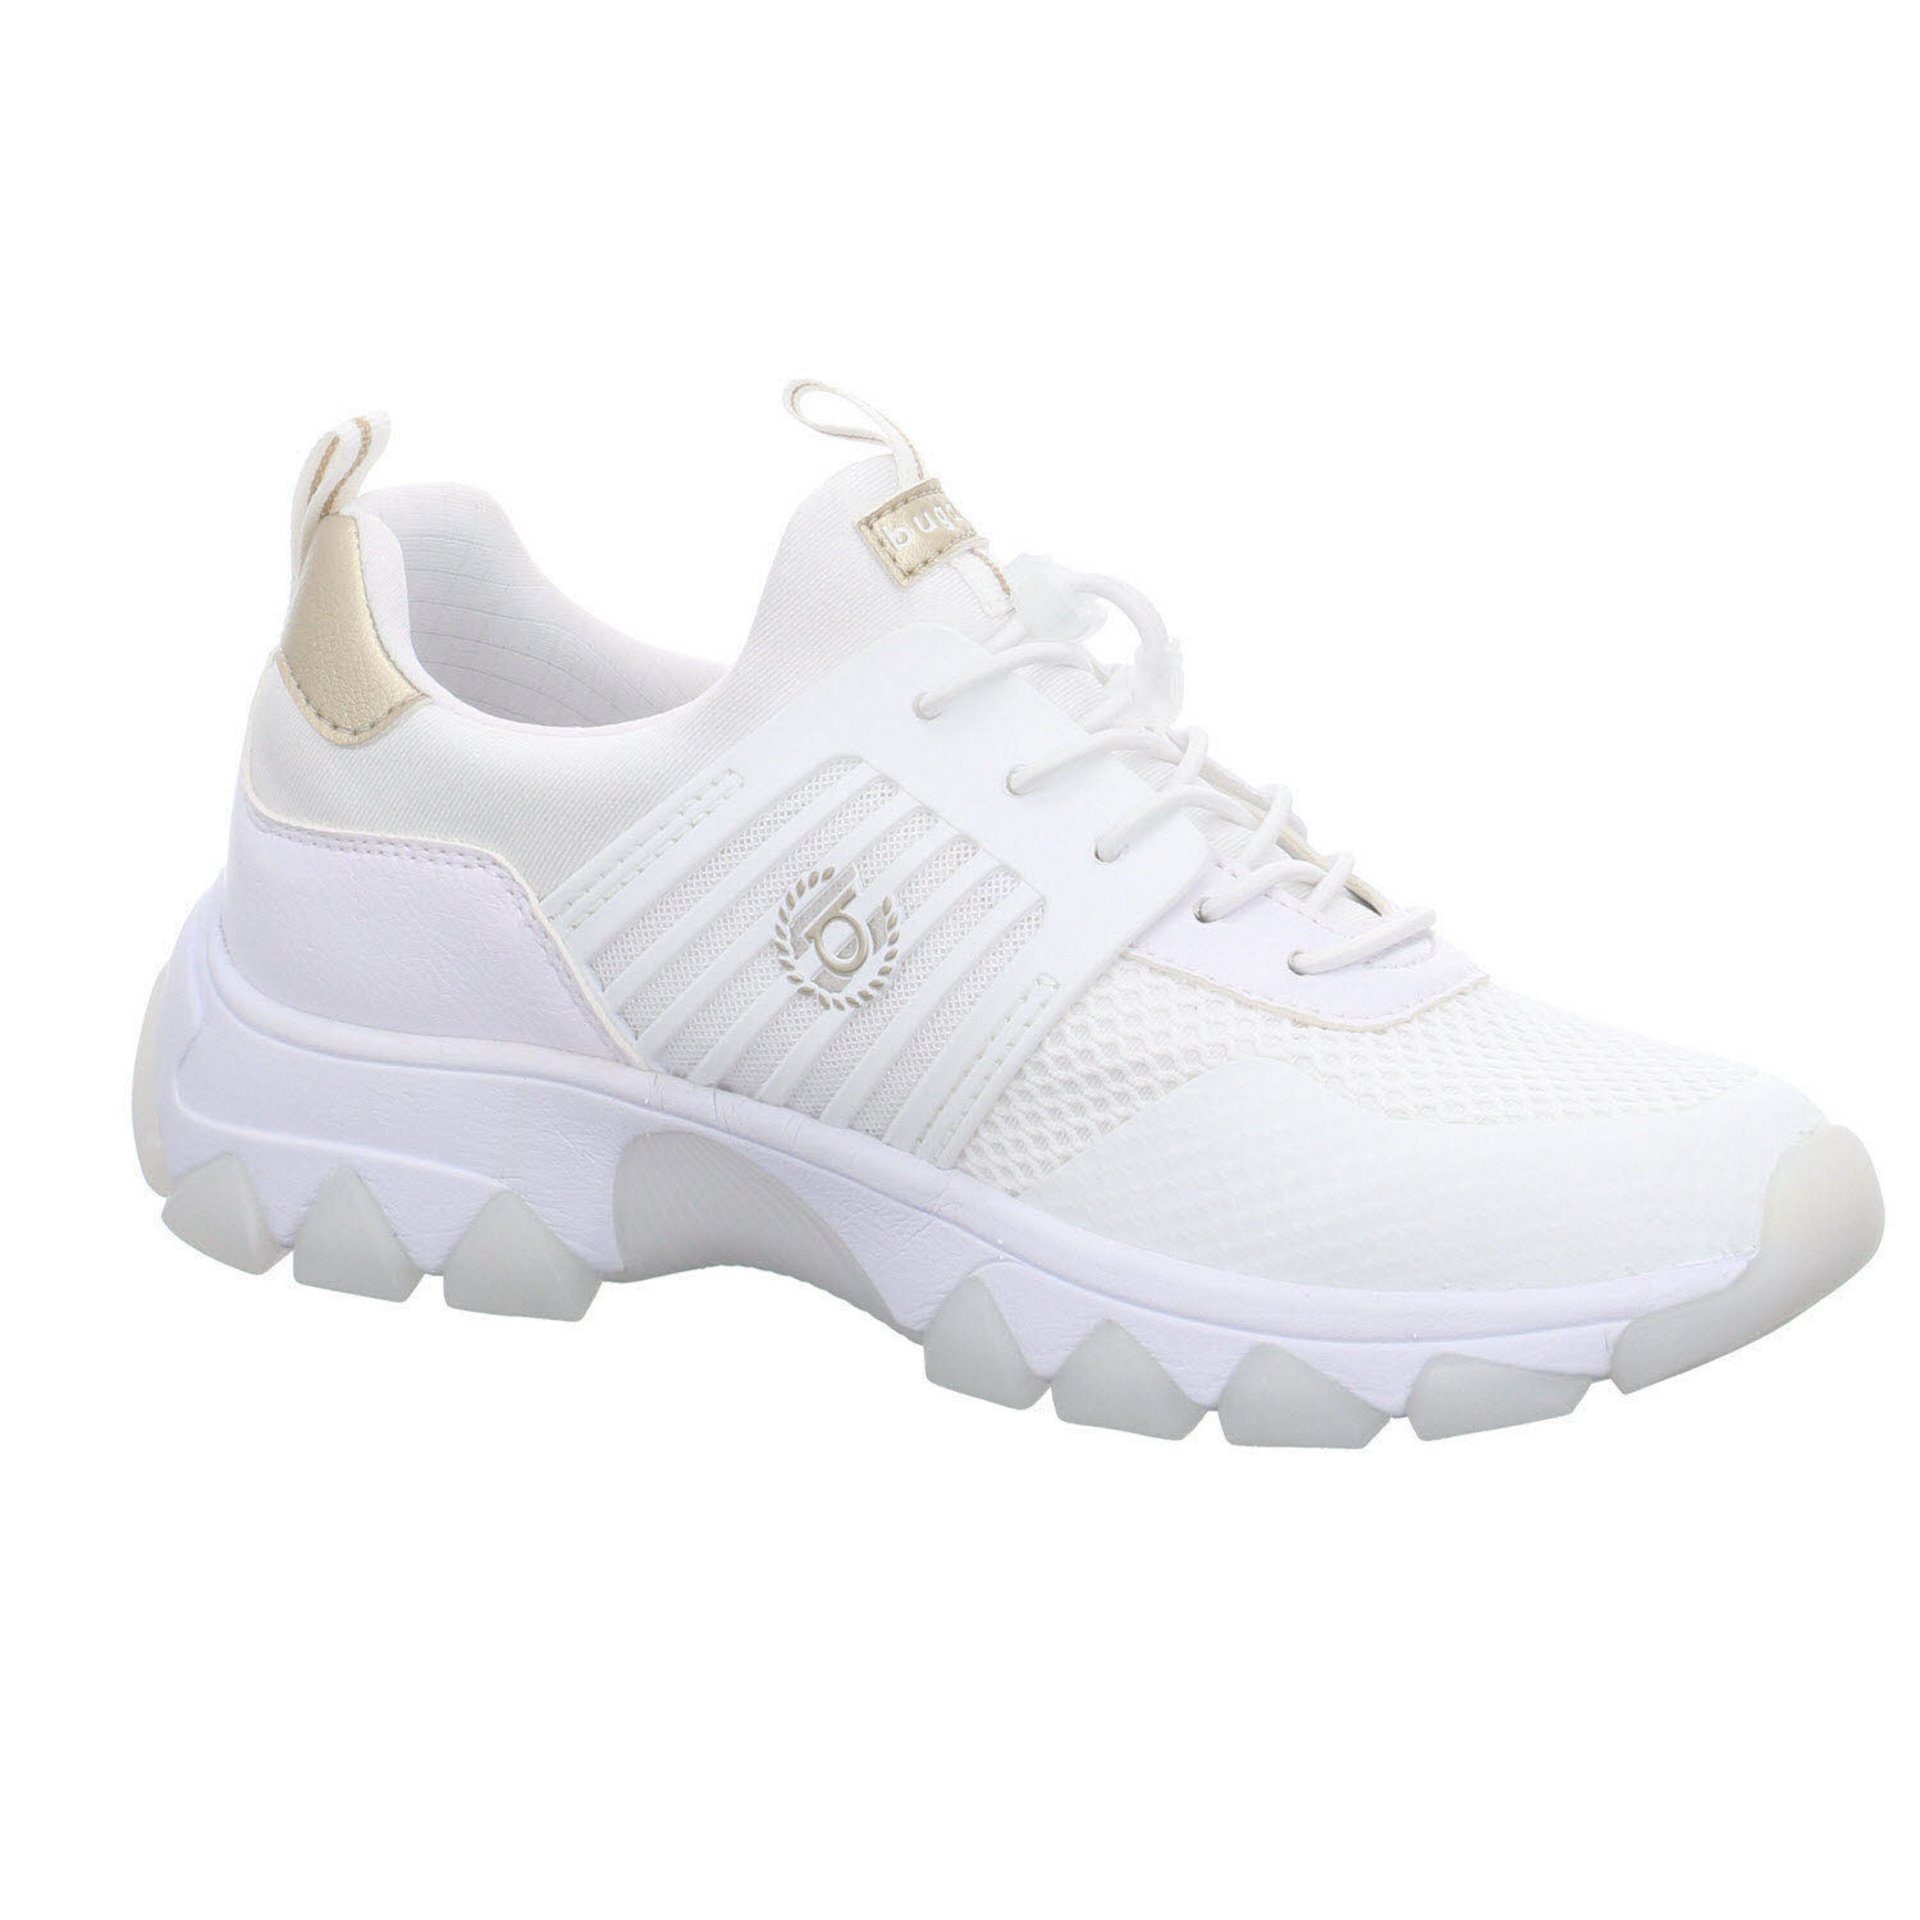 / Damen Schuhe Halbschuhe white Sneaker Sneaker gold Synthetikkombination bugatti Schnürschuh Sport